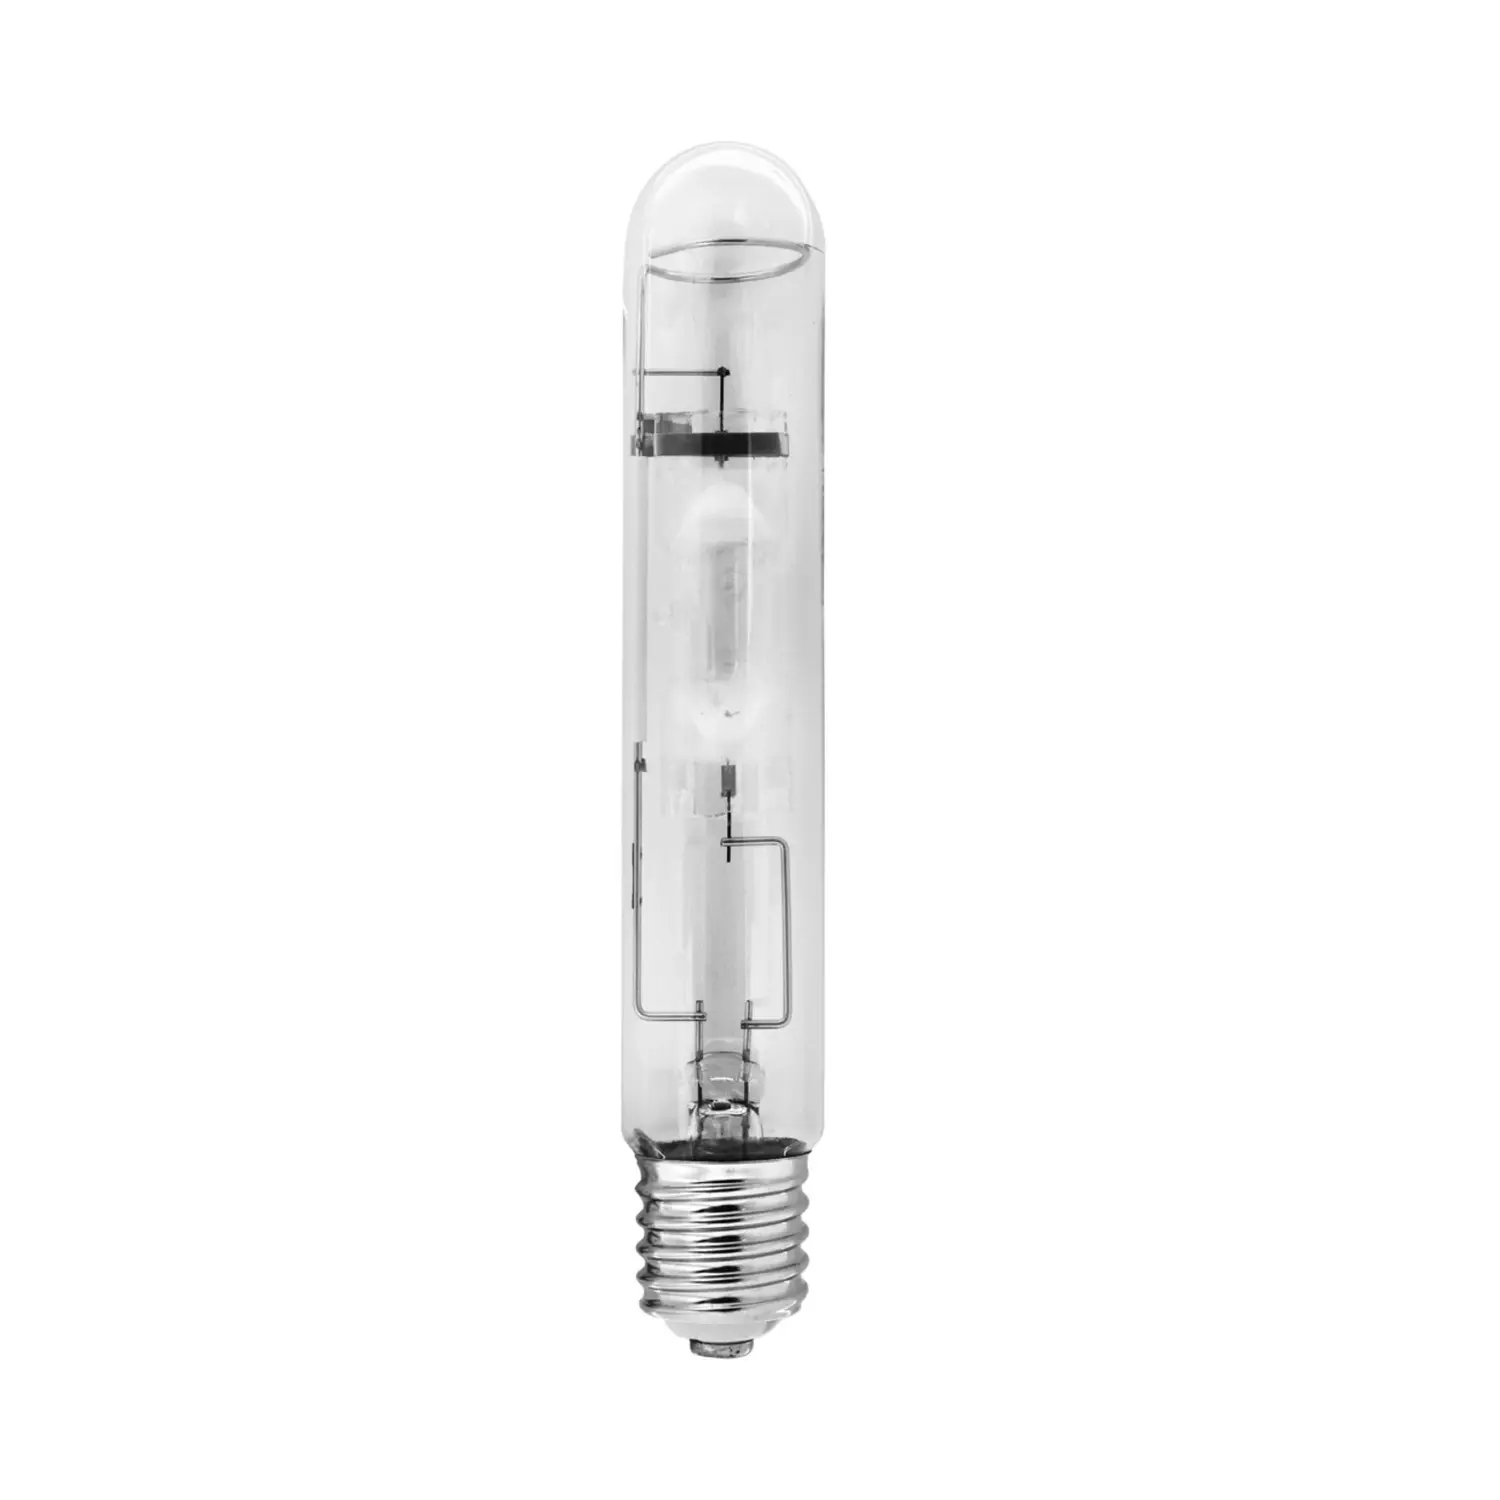 immagine lampadina ioduri metallici lampada industriale e40 400 watt bianco naturale